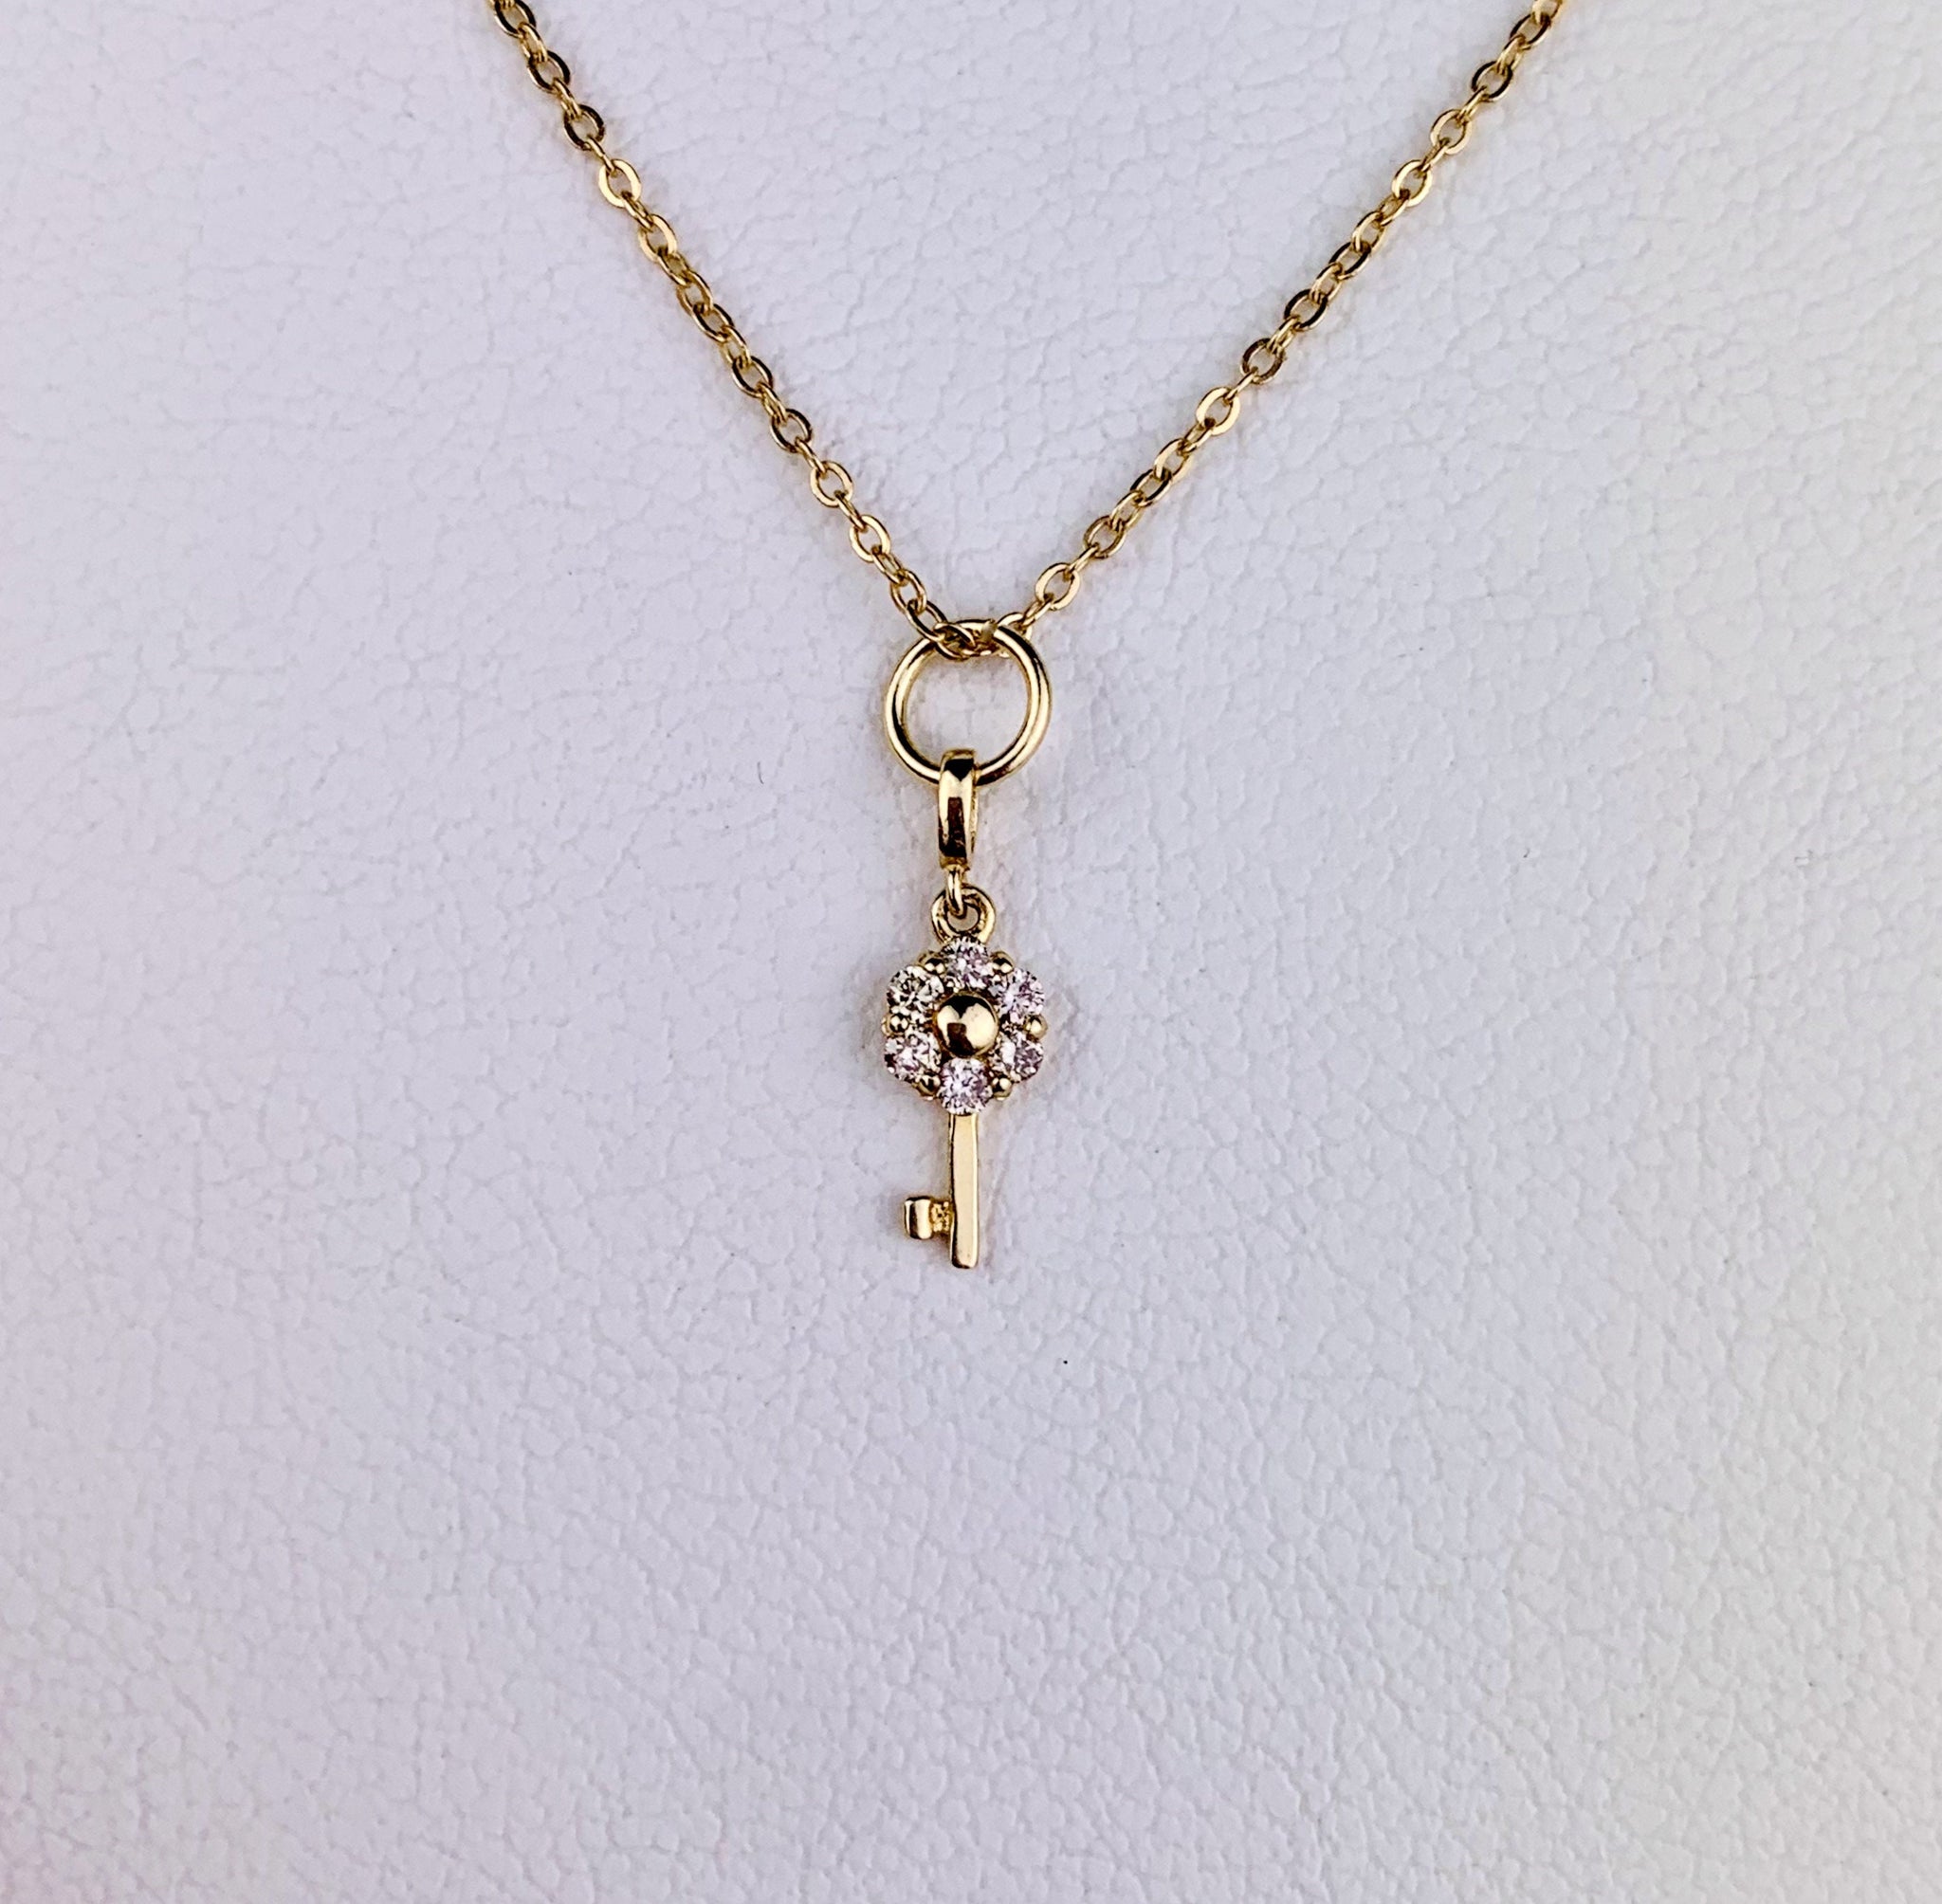 14K Solid White Gold Diamond Key Necklace